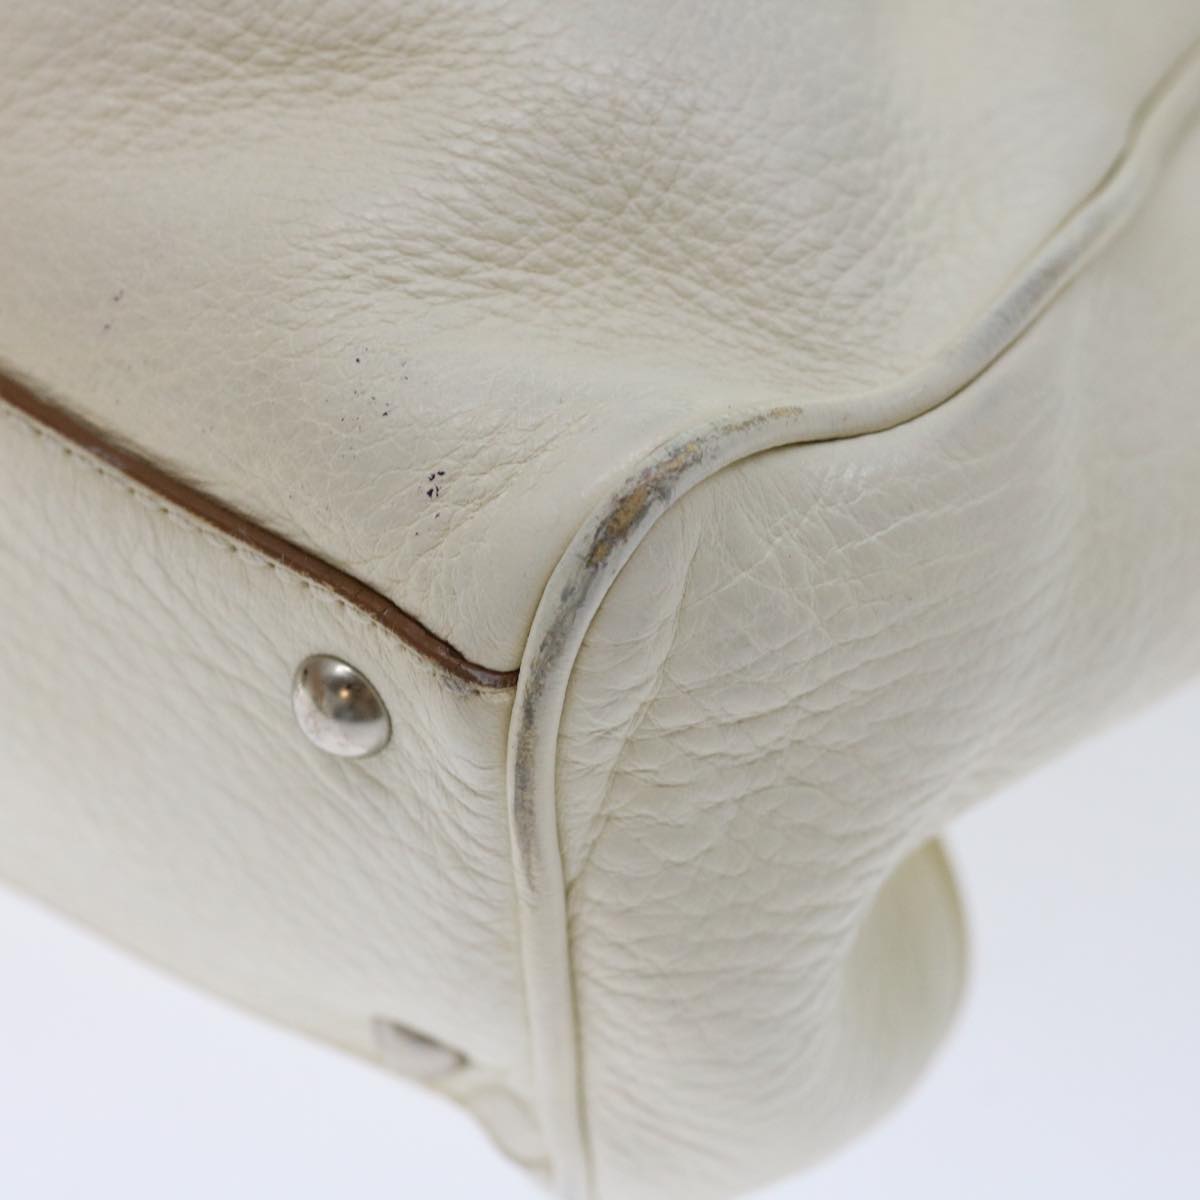 Salvatore Ferragamo Gancini Shoulder Bag Leather White Auth 70361